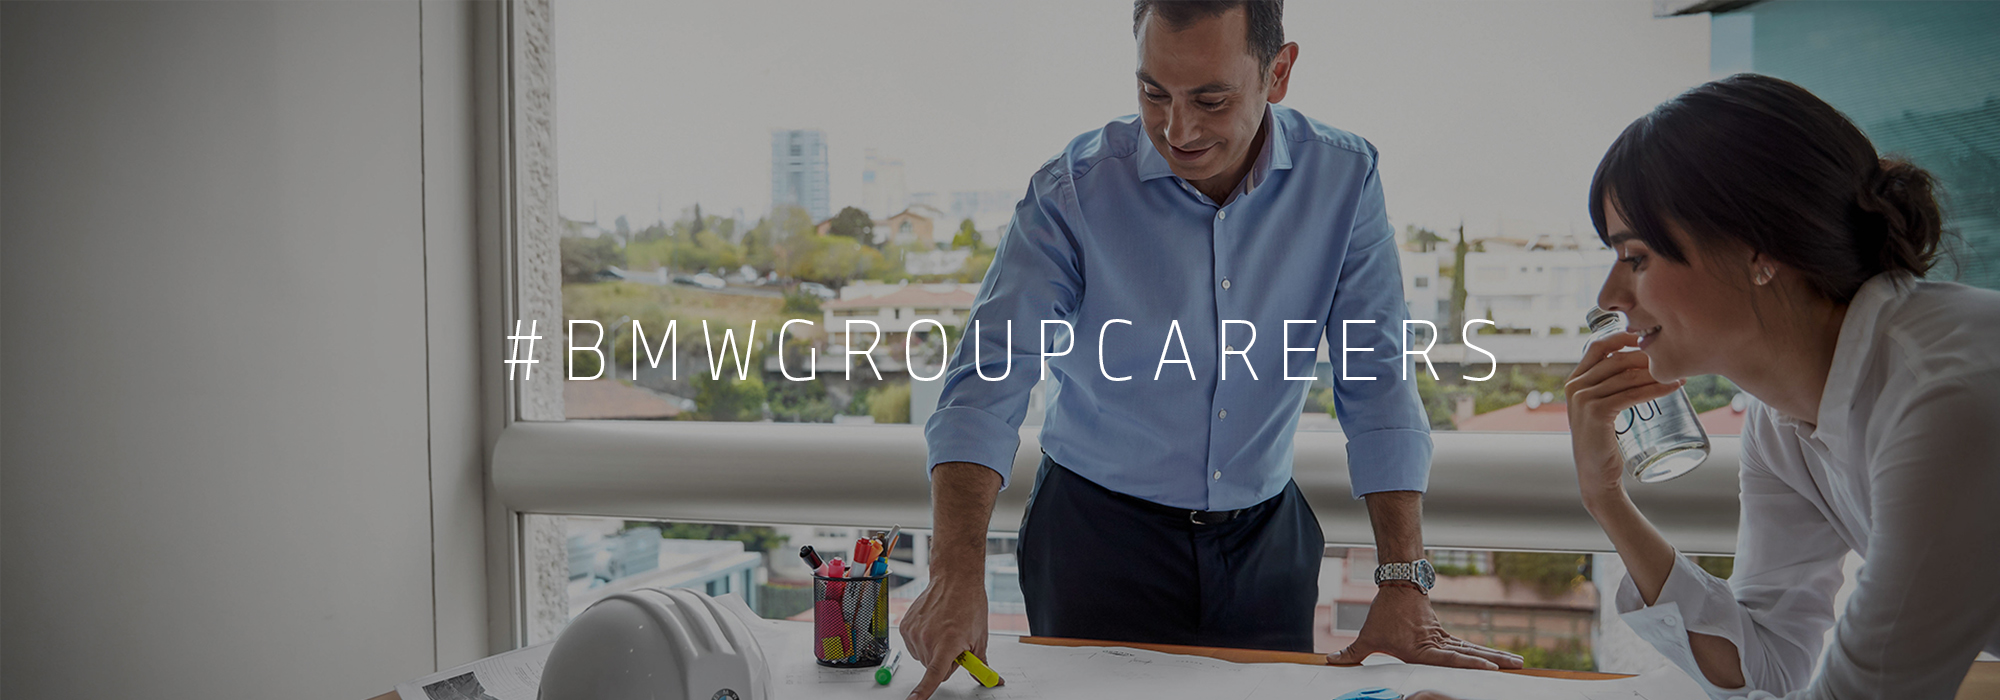 GroupCareer Shaper - HR Manager - Career Shaper